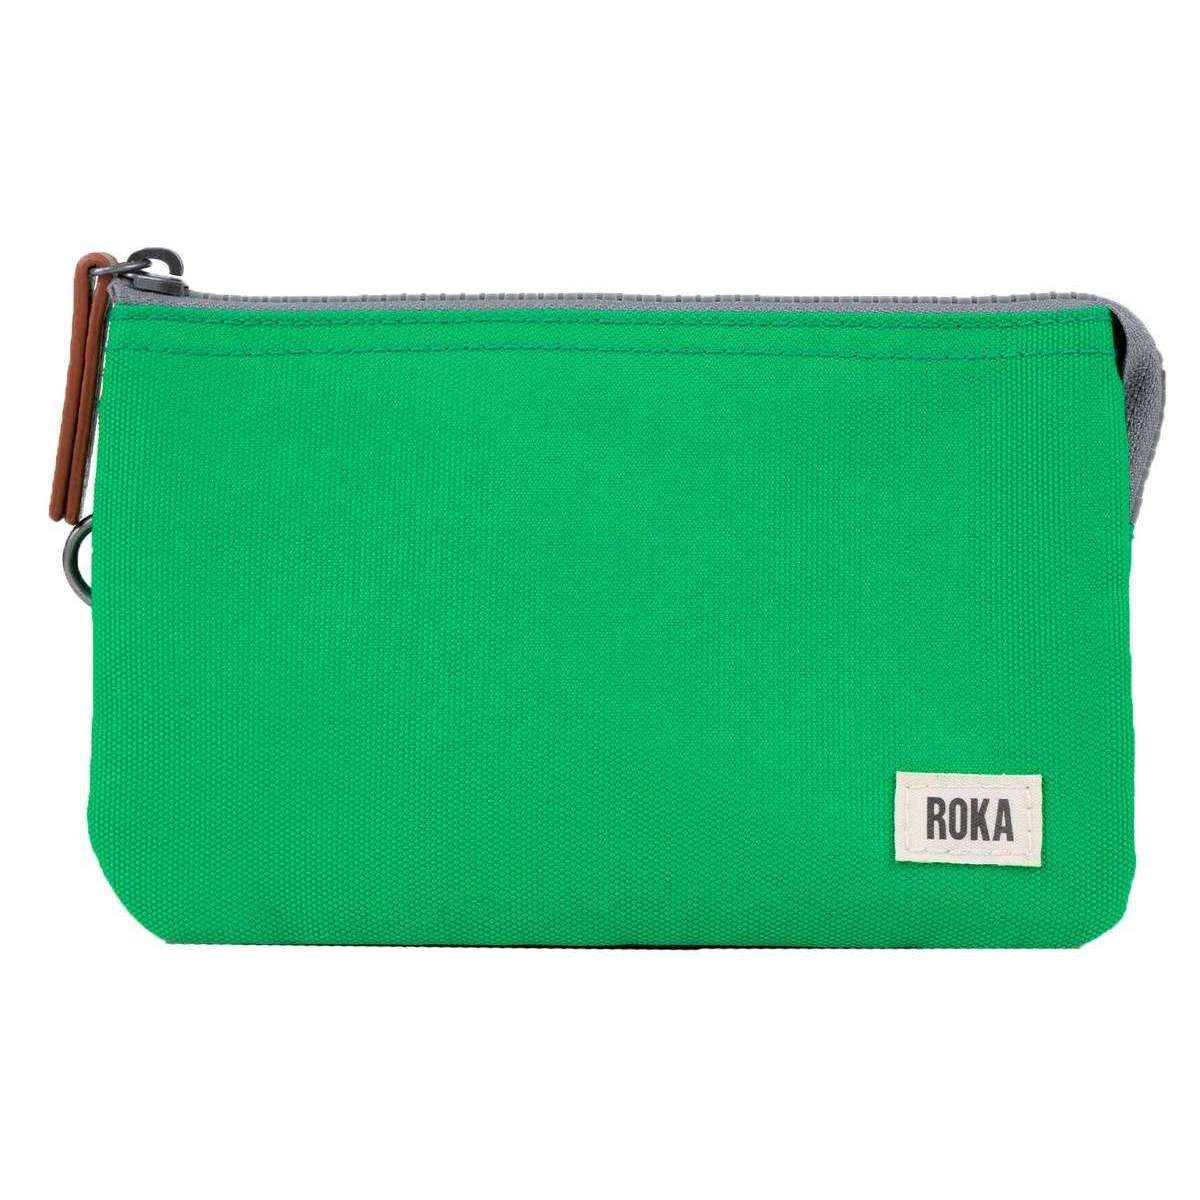 Roka Carnaby Medium Sustainable Canvas Wallet - Green Apple